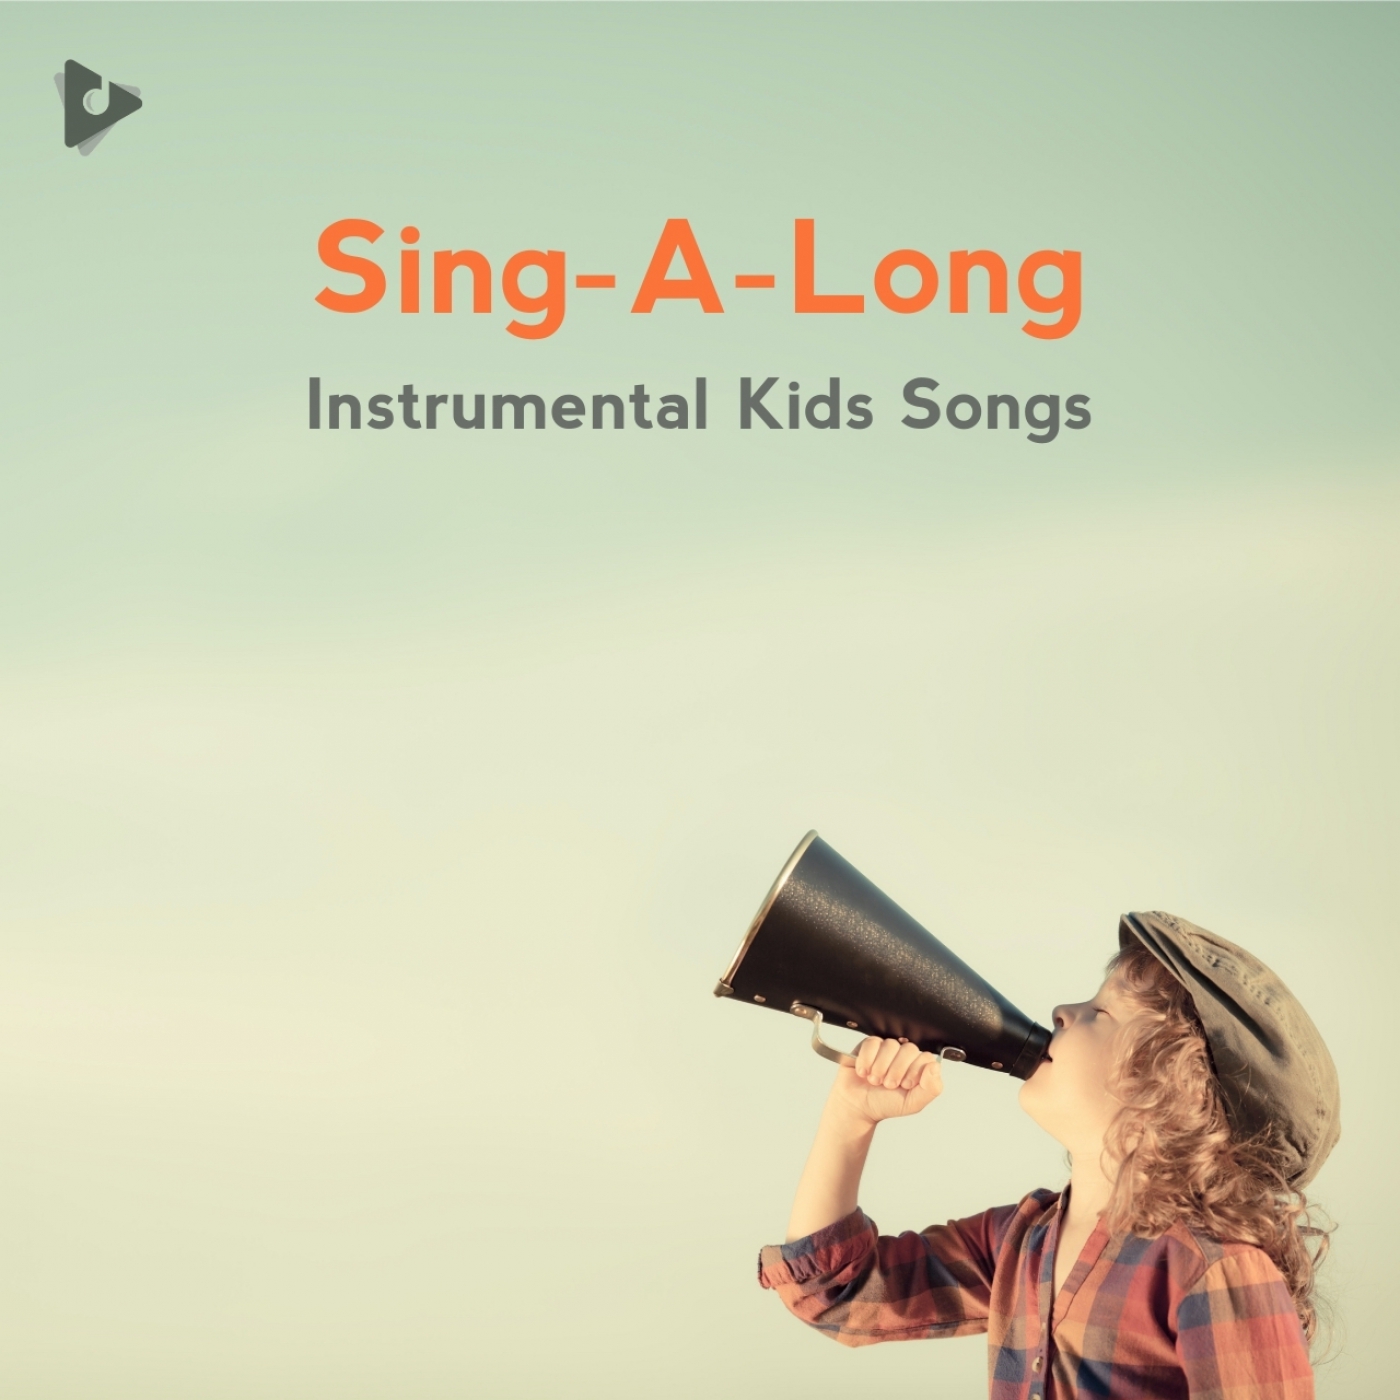 Sing-A-Long Instrumental Kids Songs